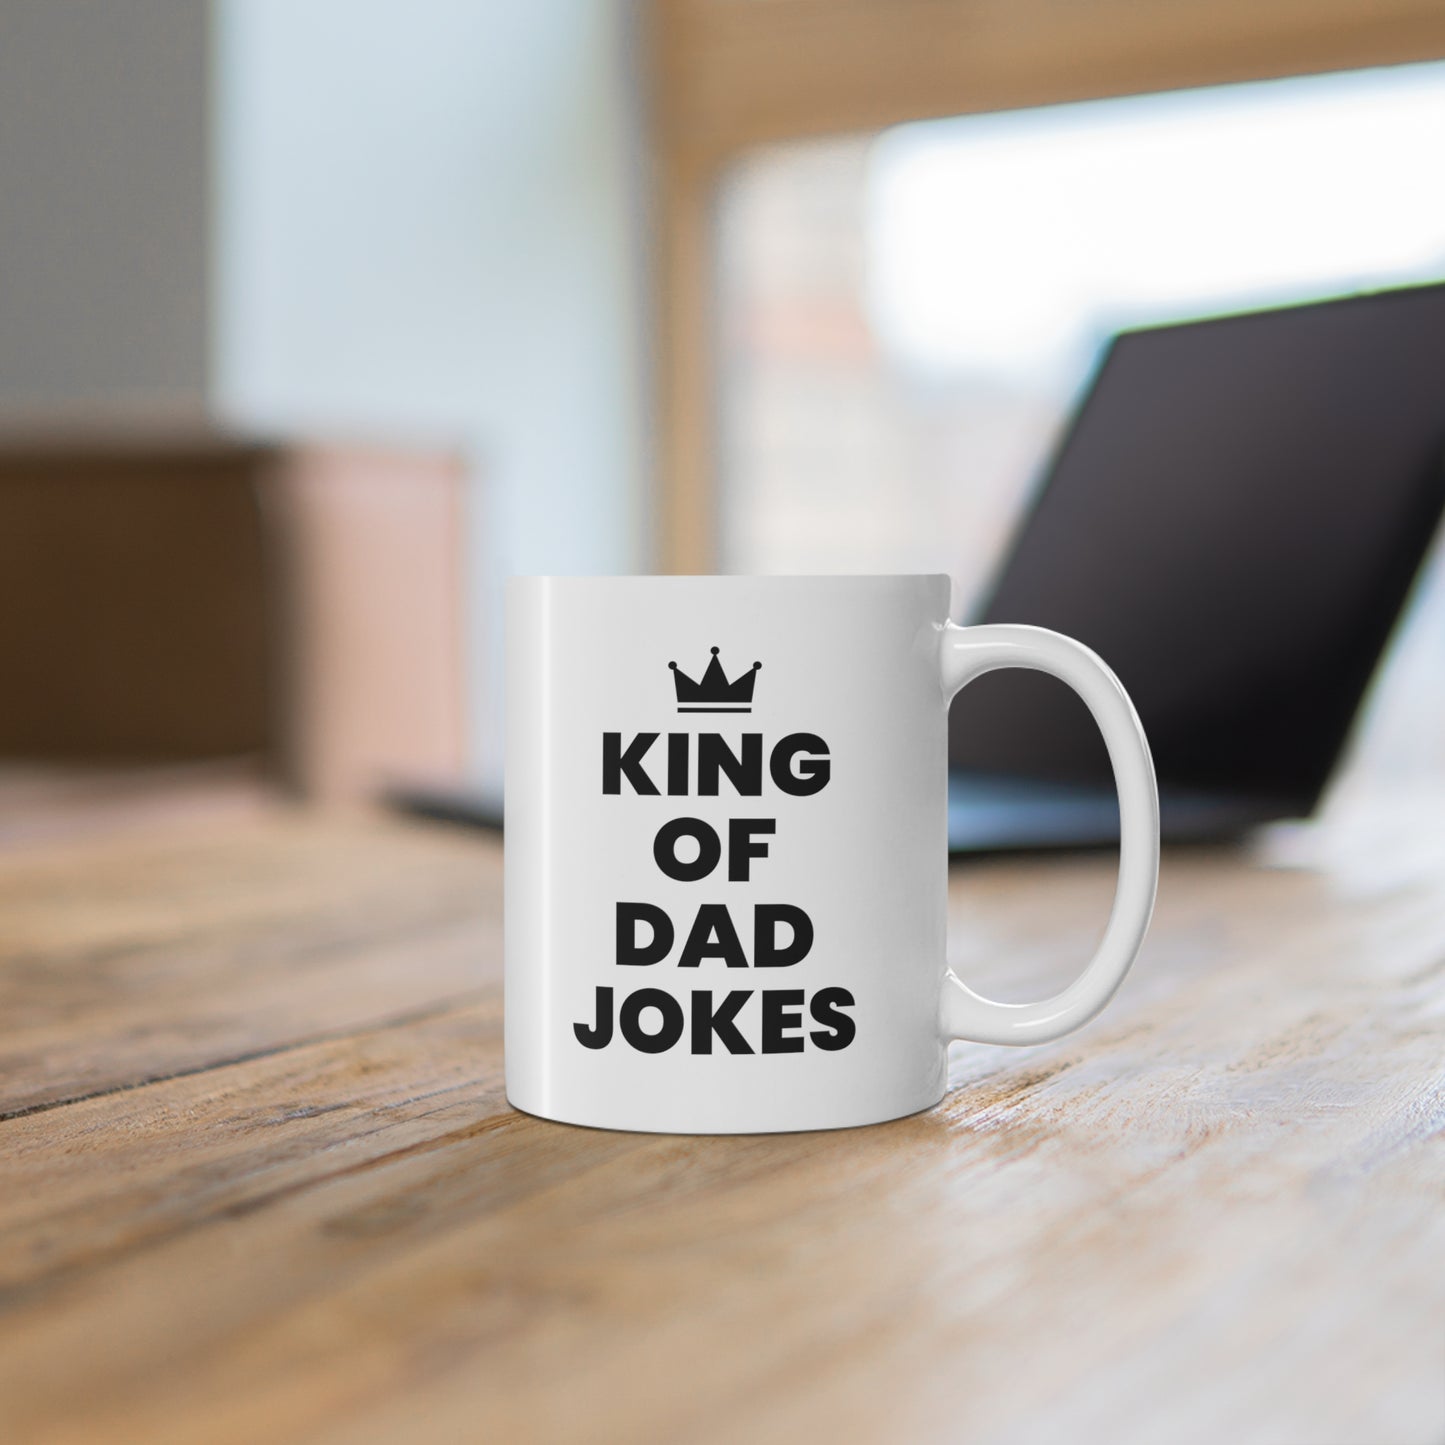 11oz ceramic mug with quote King of Dad Jokes